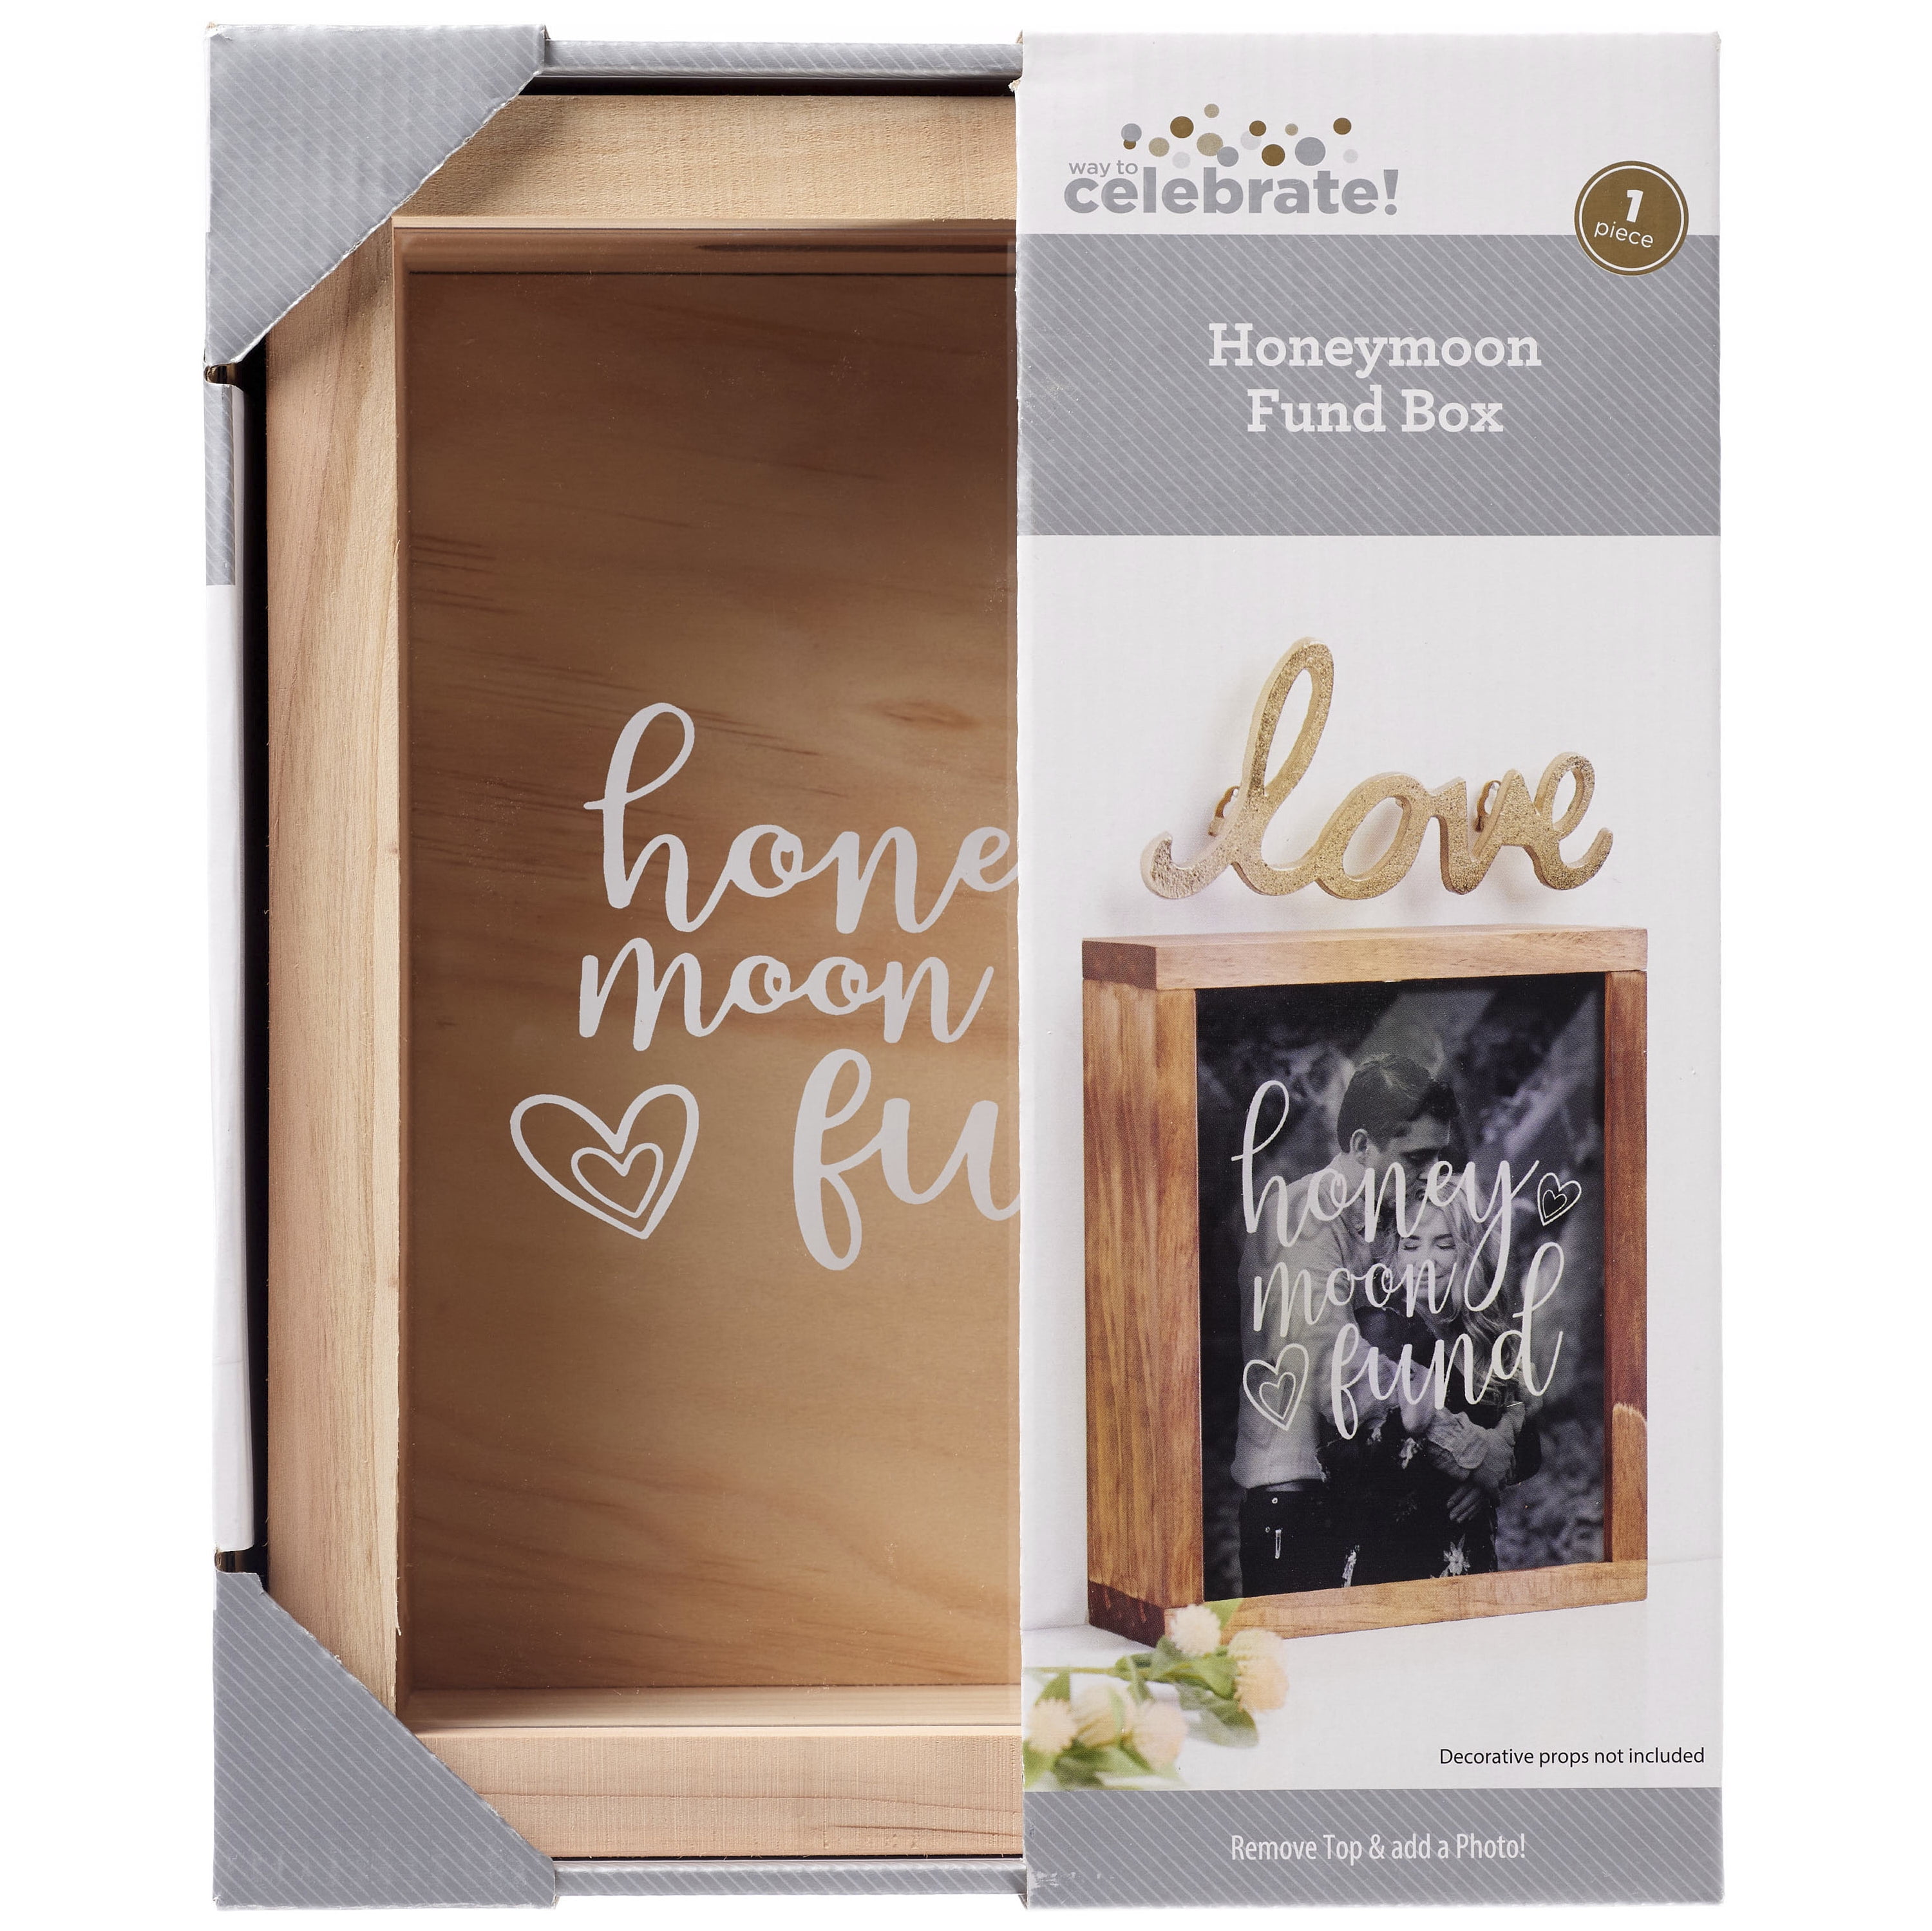 Celebrate Honeymoon Fund Box 